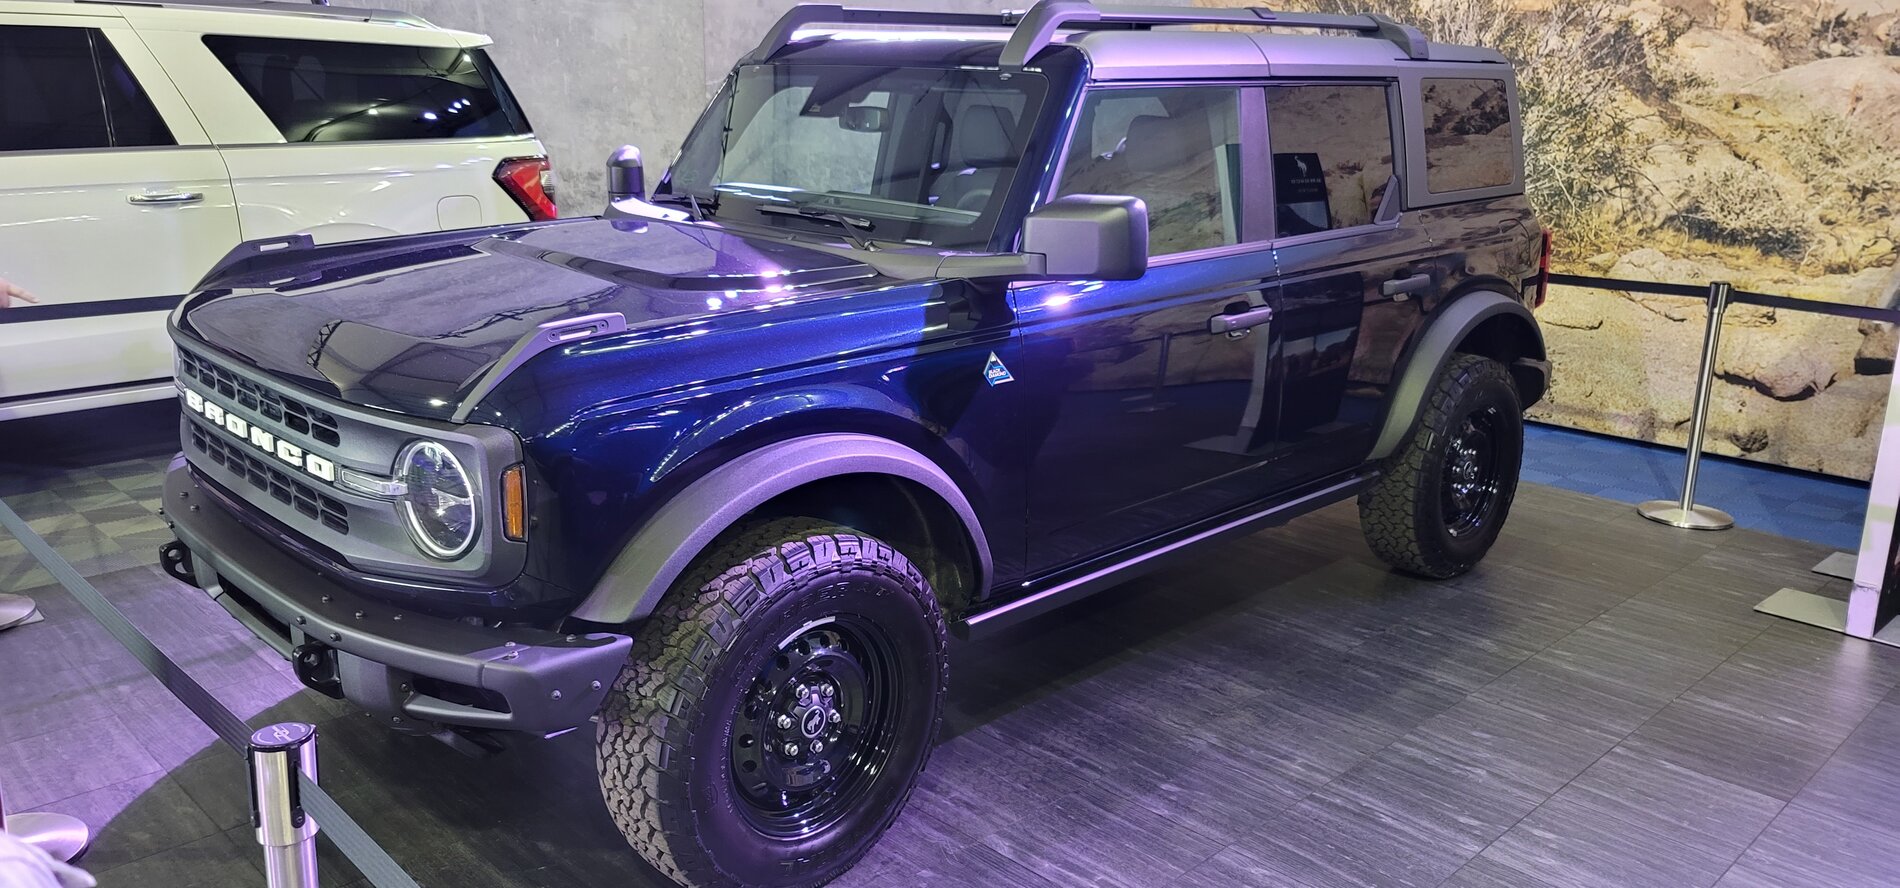 Ford Bronco Broncos at Barrett Jackson Auction: 2-Door Lightning Blue Bronco + 4-Door Antimatter Blue Bronco 20210322_155111